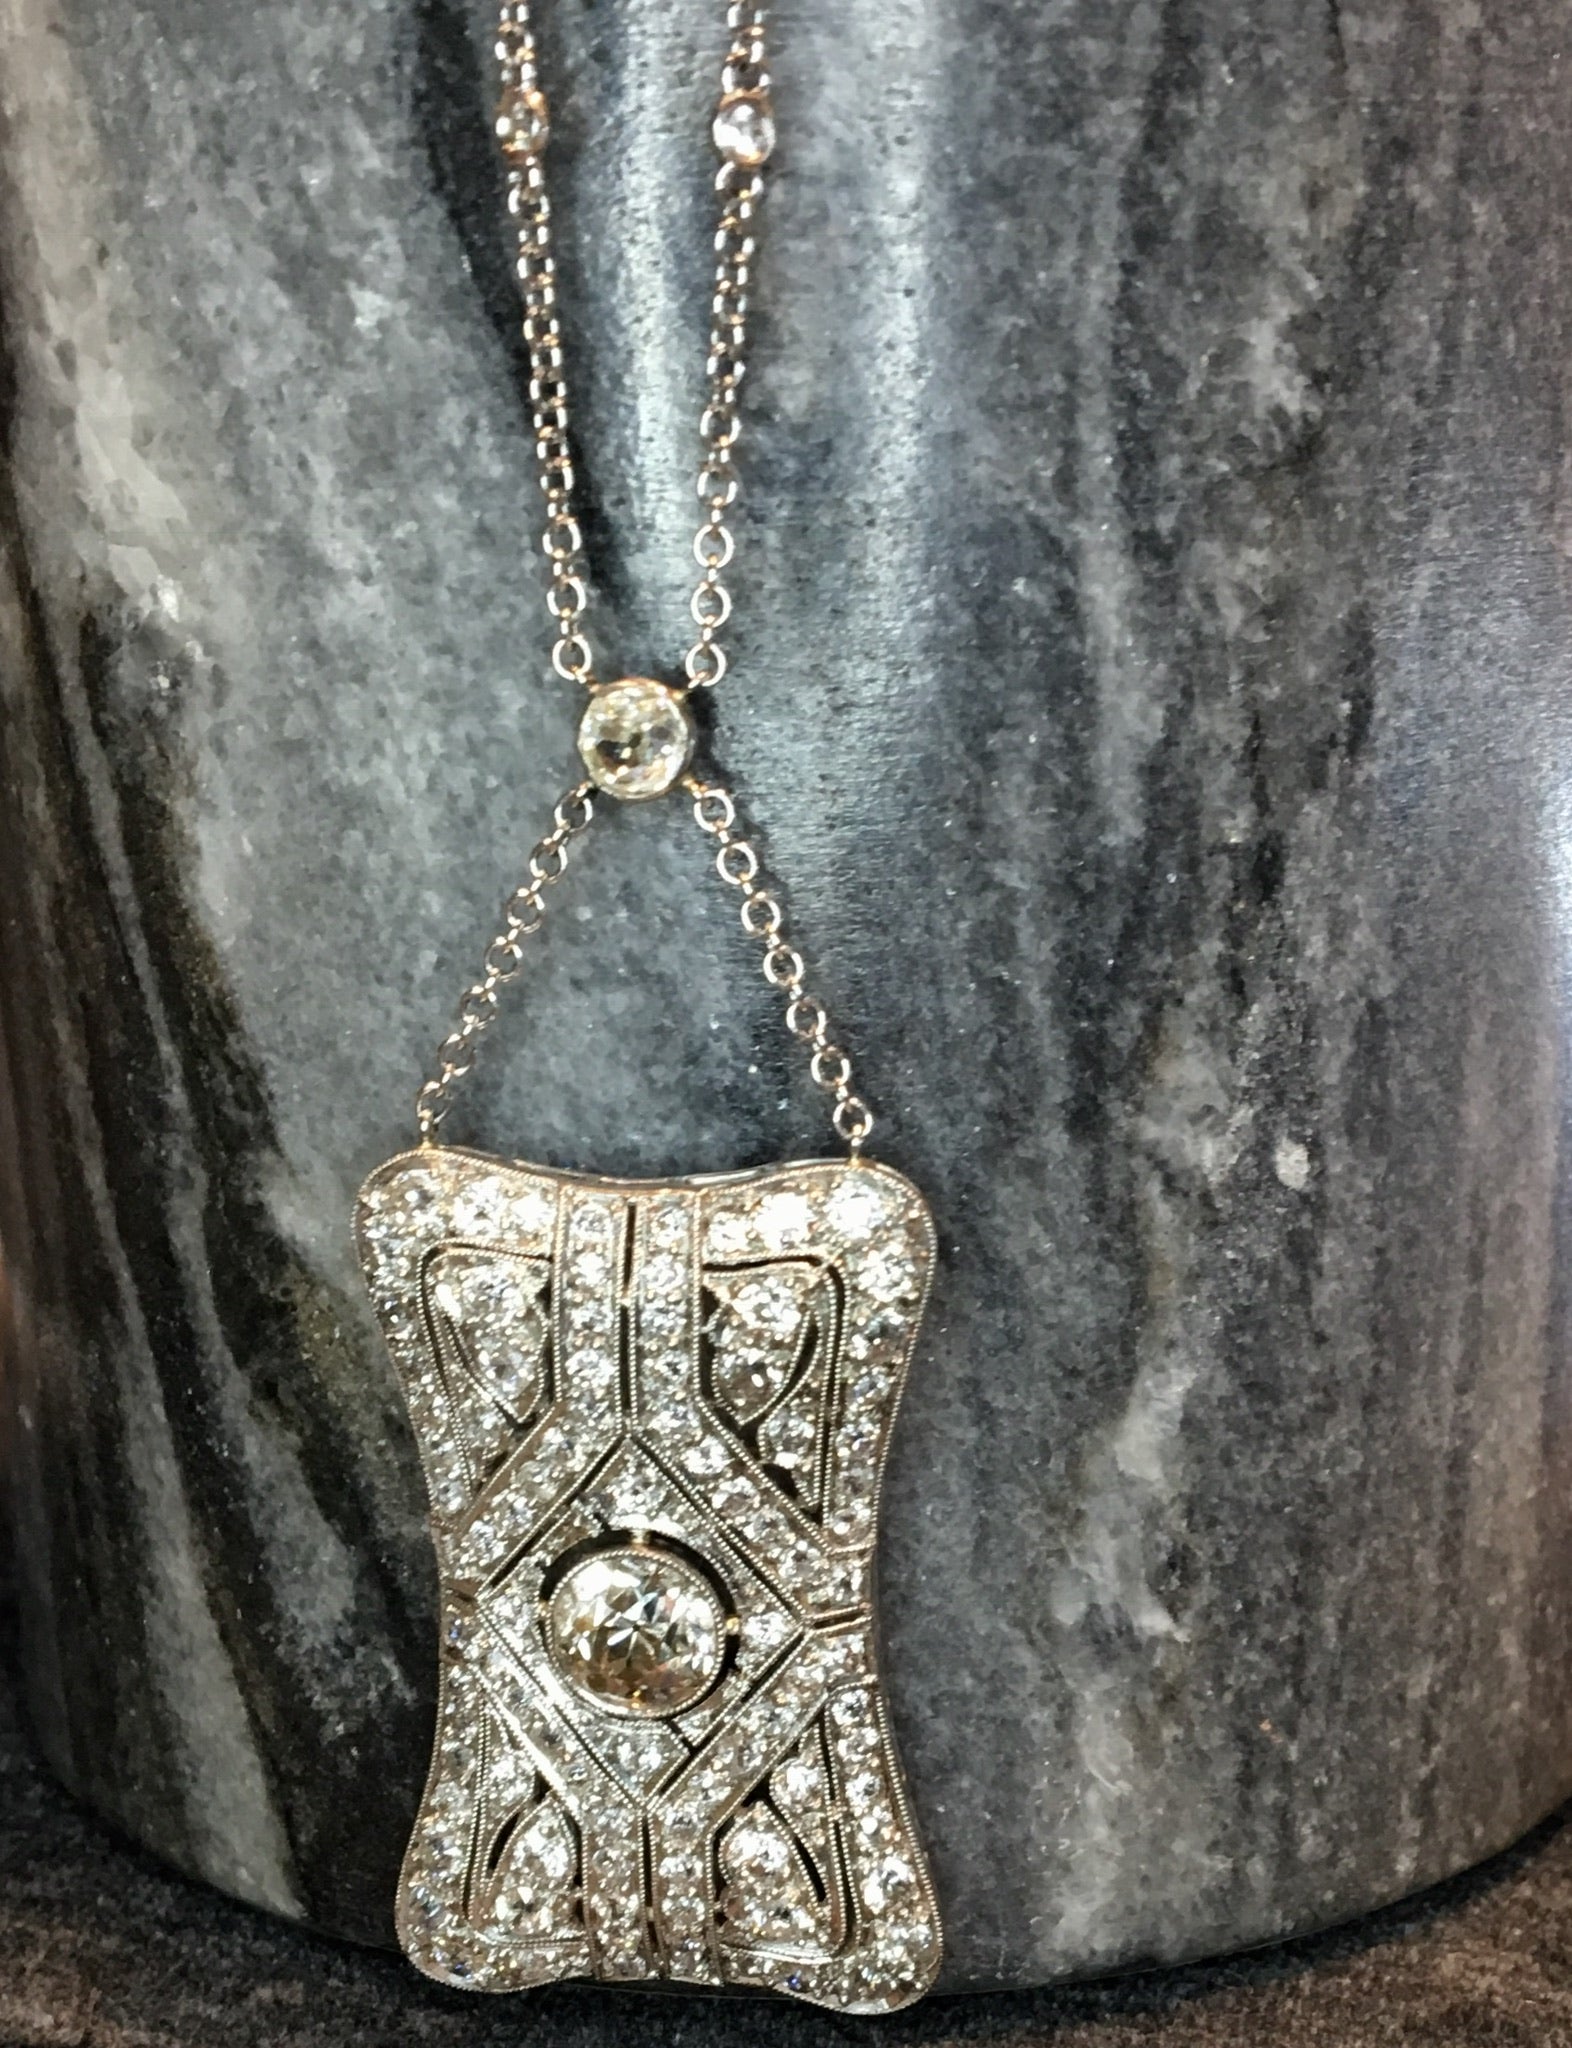 Antique Necklace Art Deco 5.08 Old European Cut Diamonds in 18k White Gold & Platinum